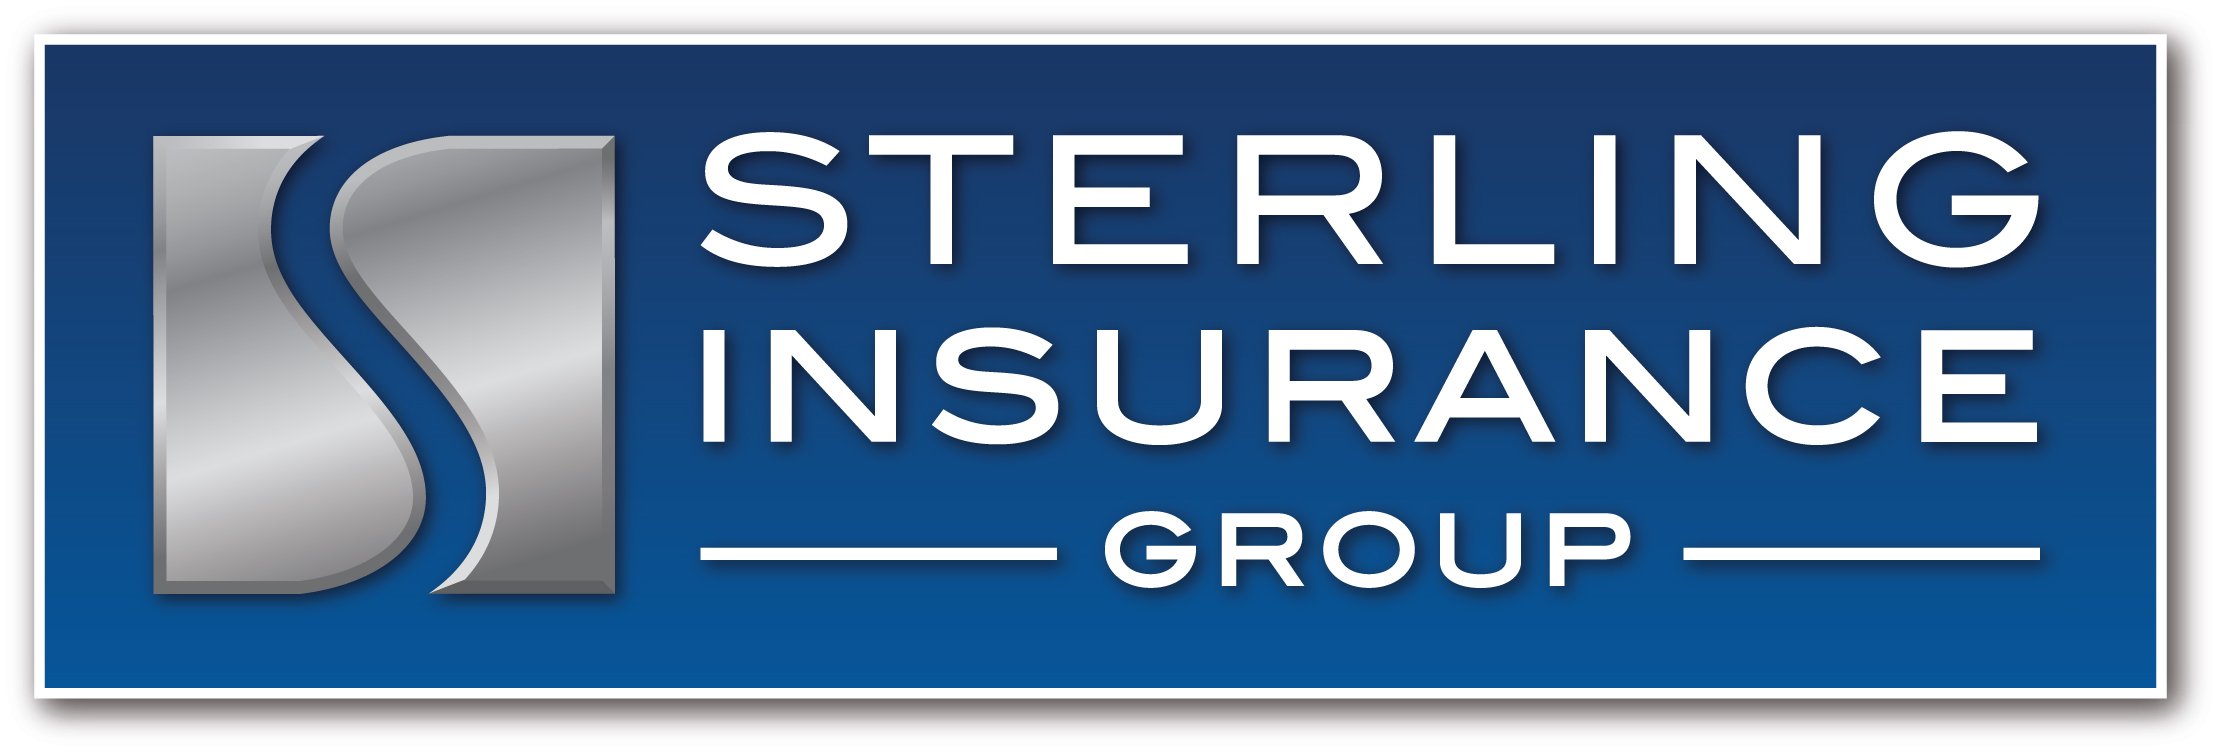 Sterling Insurance Group Company Logo